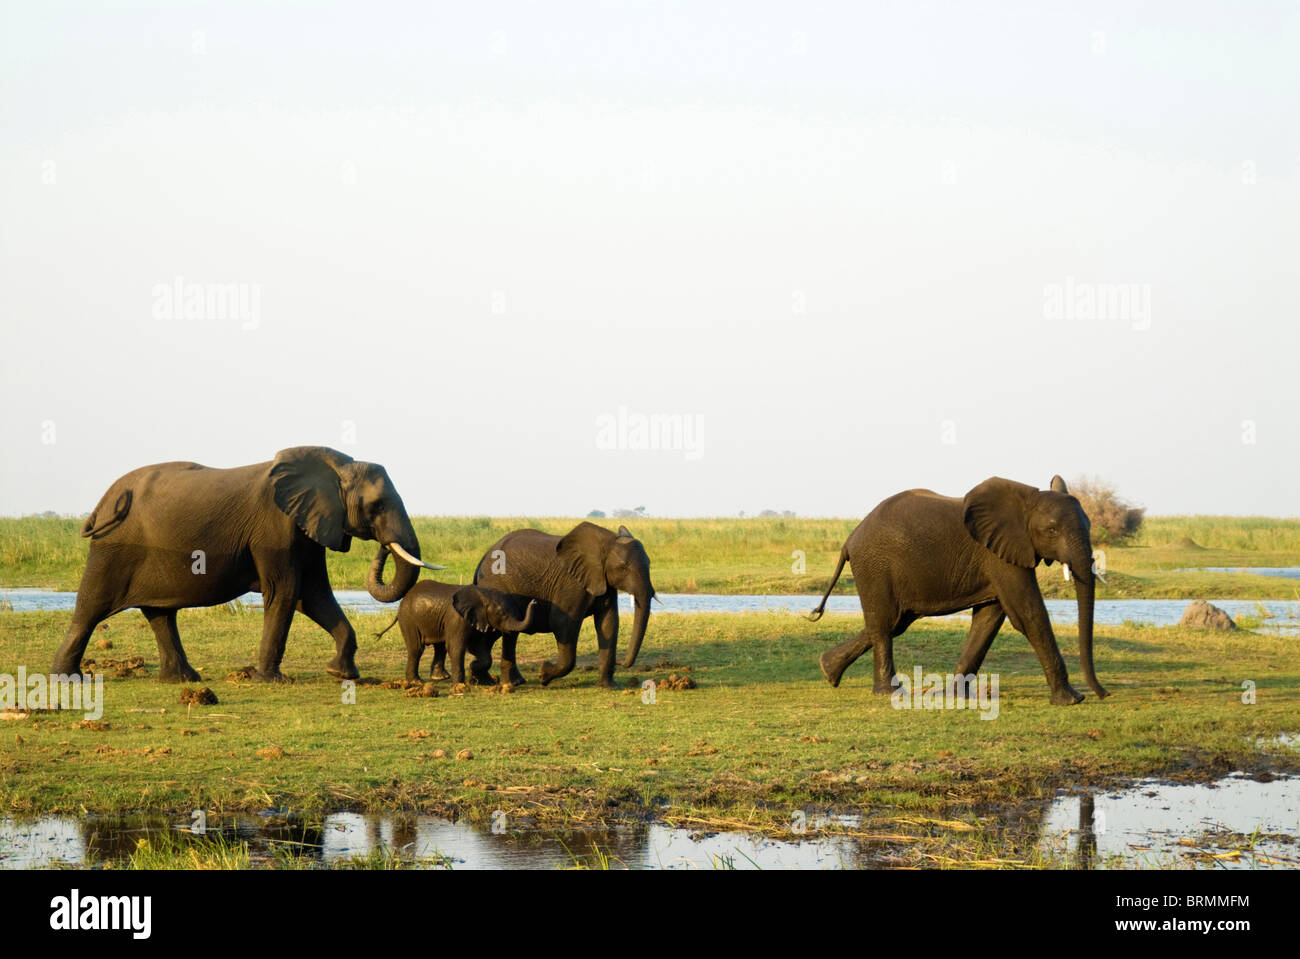 Elephant breeding herd walking near a river Stock Photo